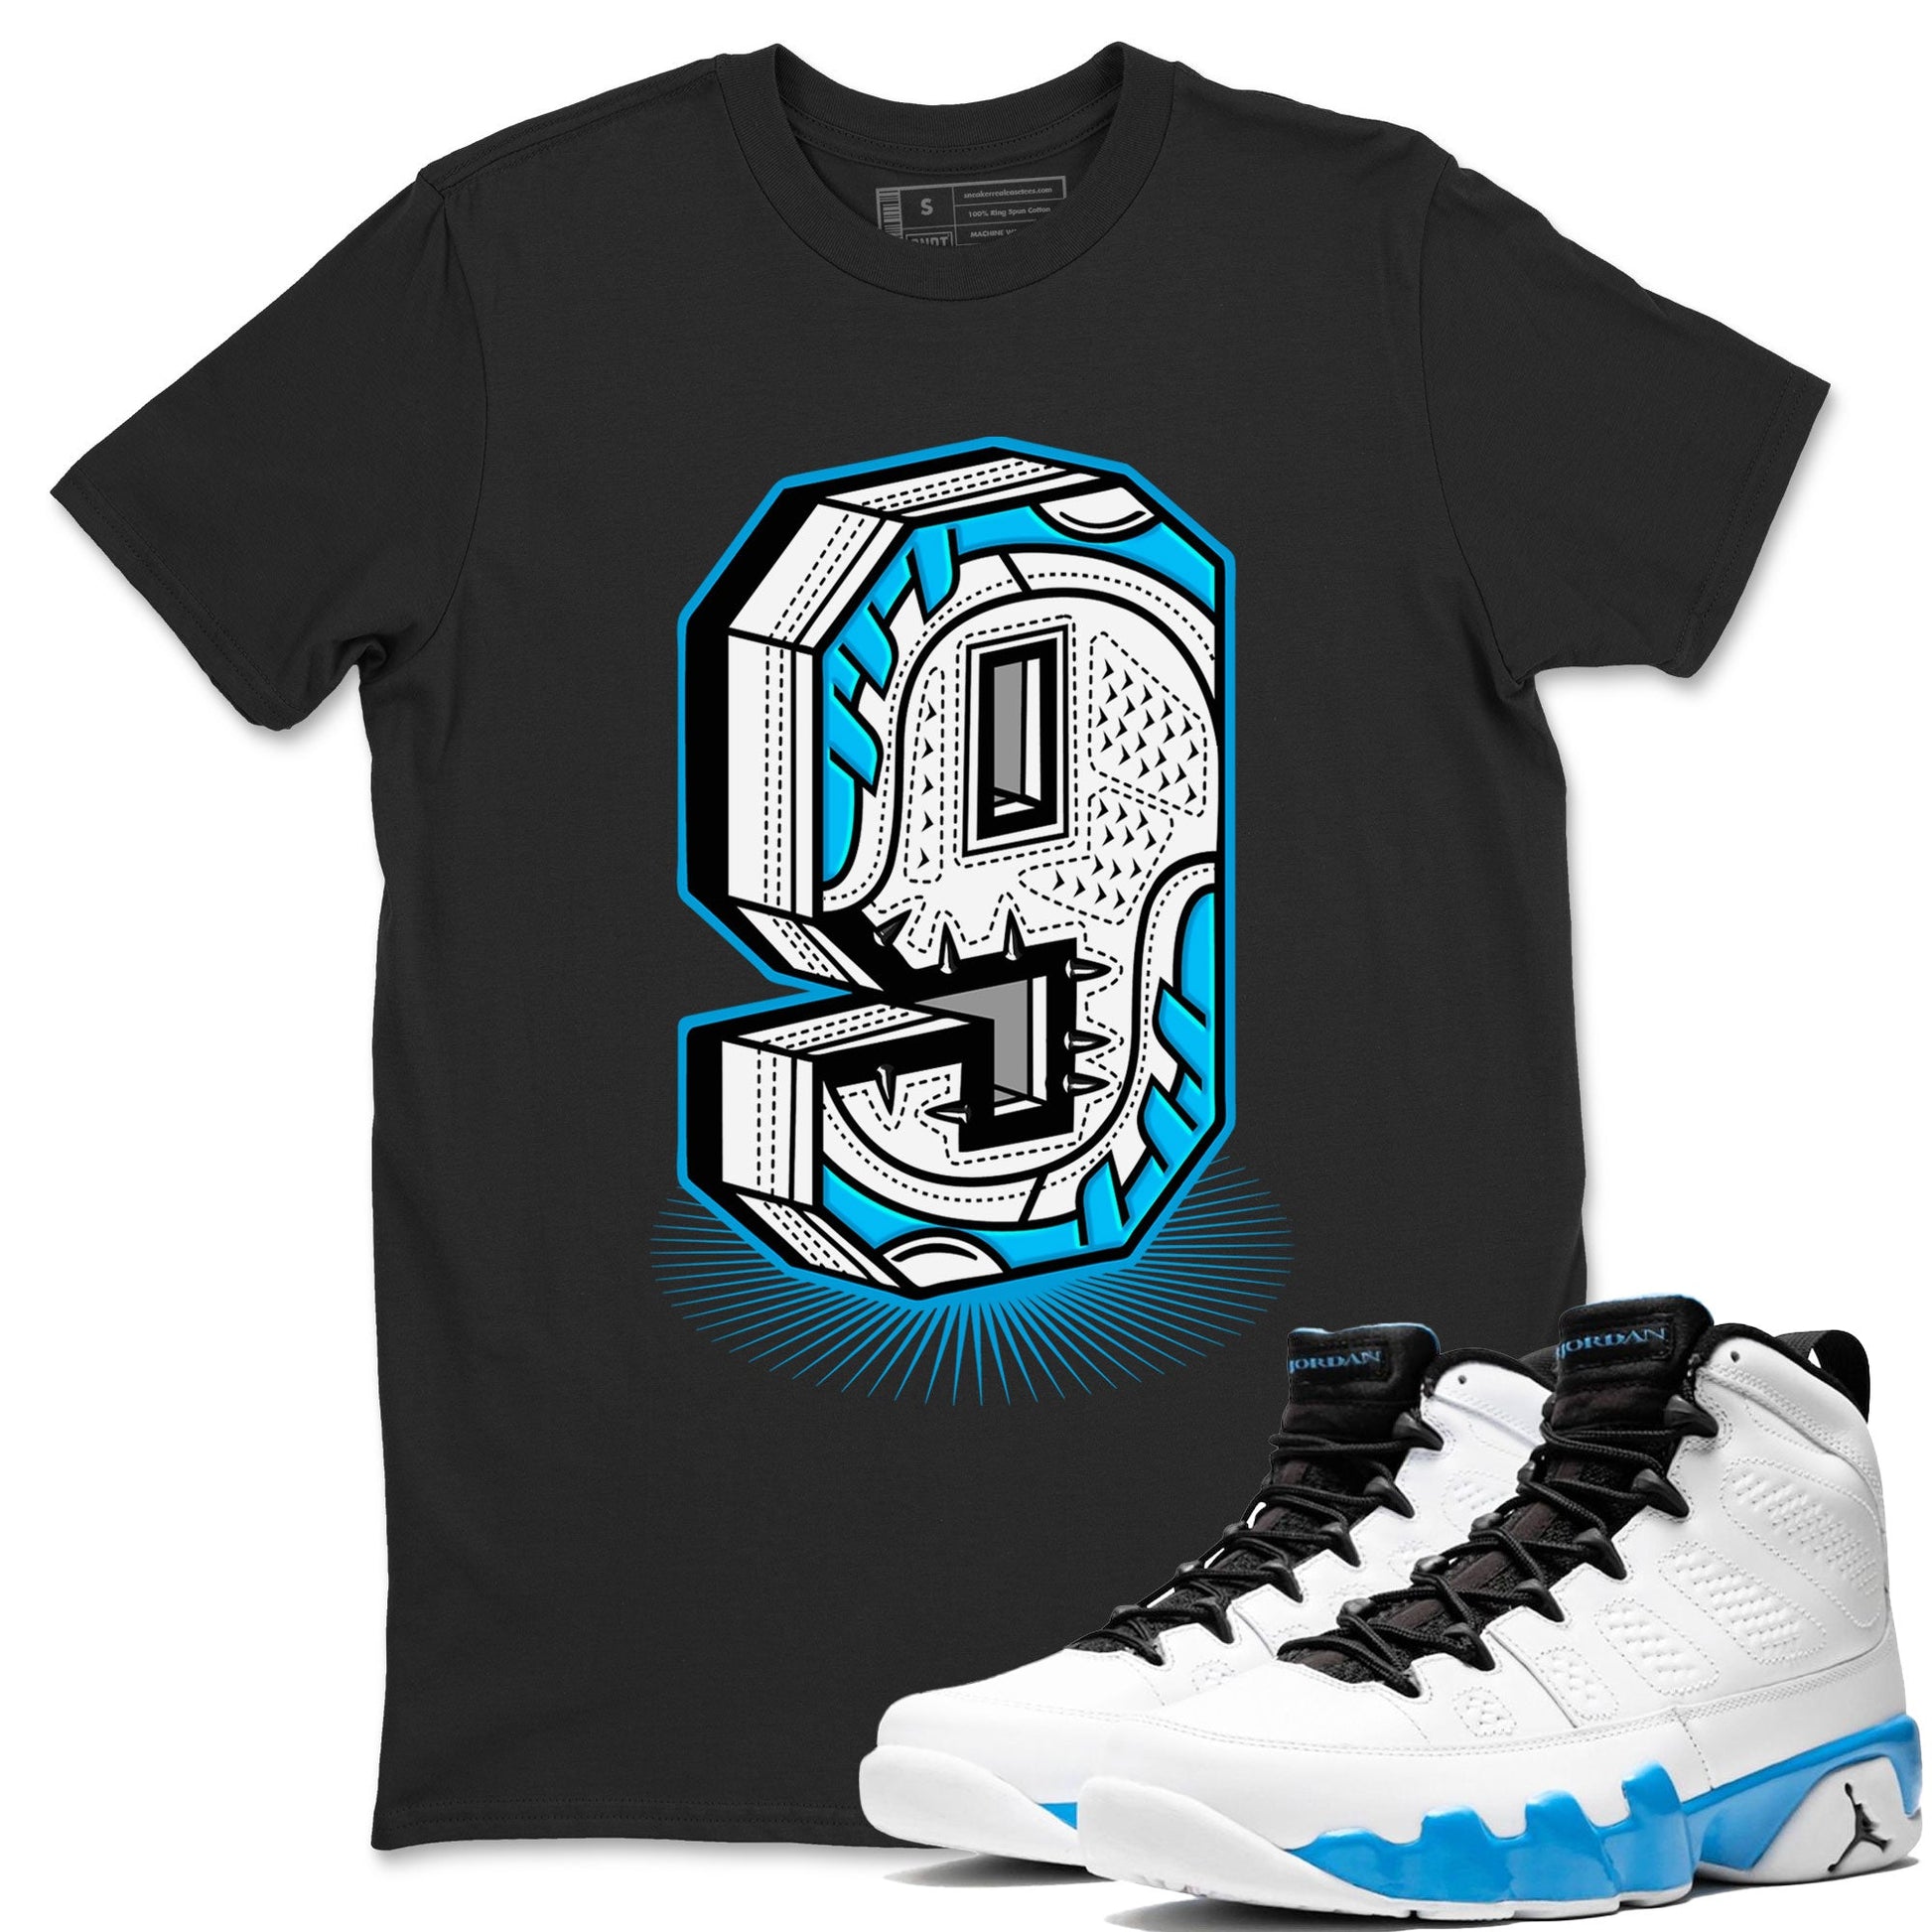 AJ9 Powder Blue shirt to match jordans Number Statue sneaker tees Air Jordan 9 Powder Blue SNRT Sneaker Release Tees unisex cotton Black 1 crew neck shirt